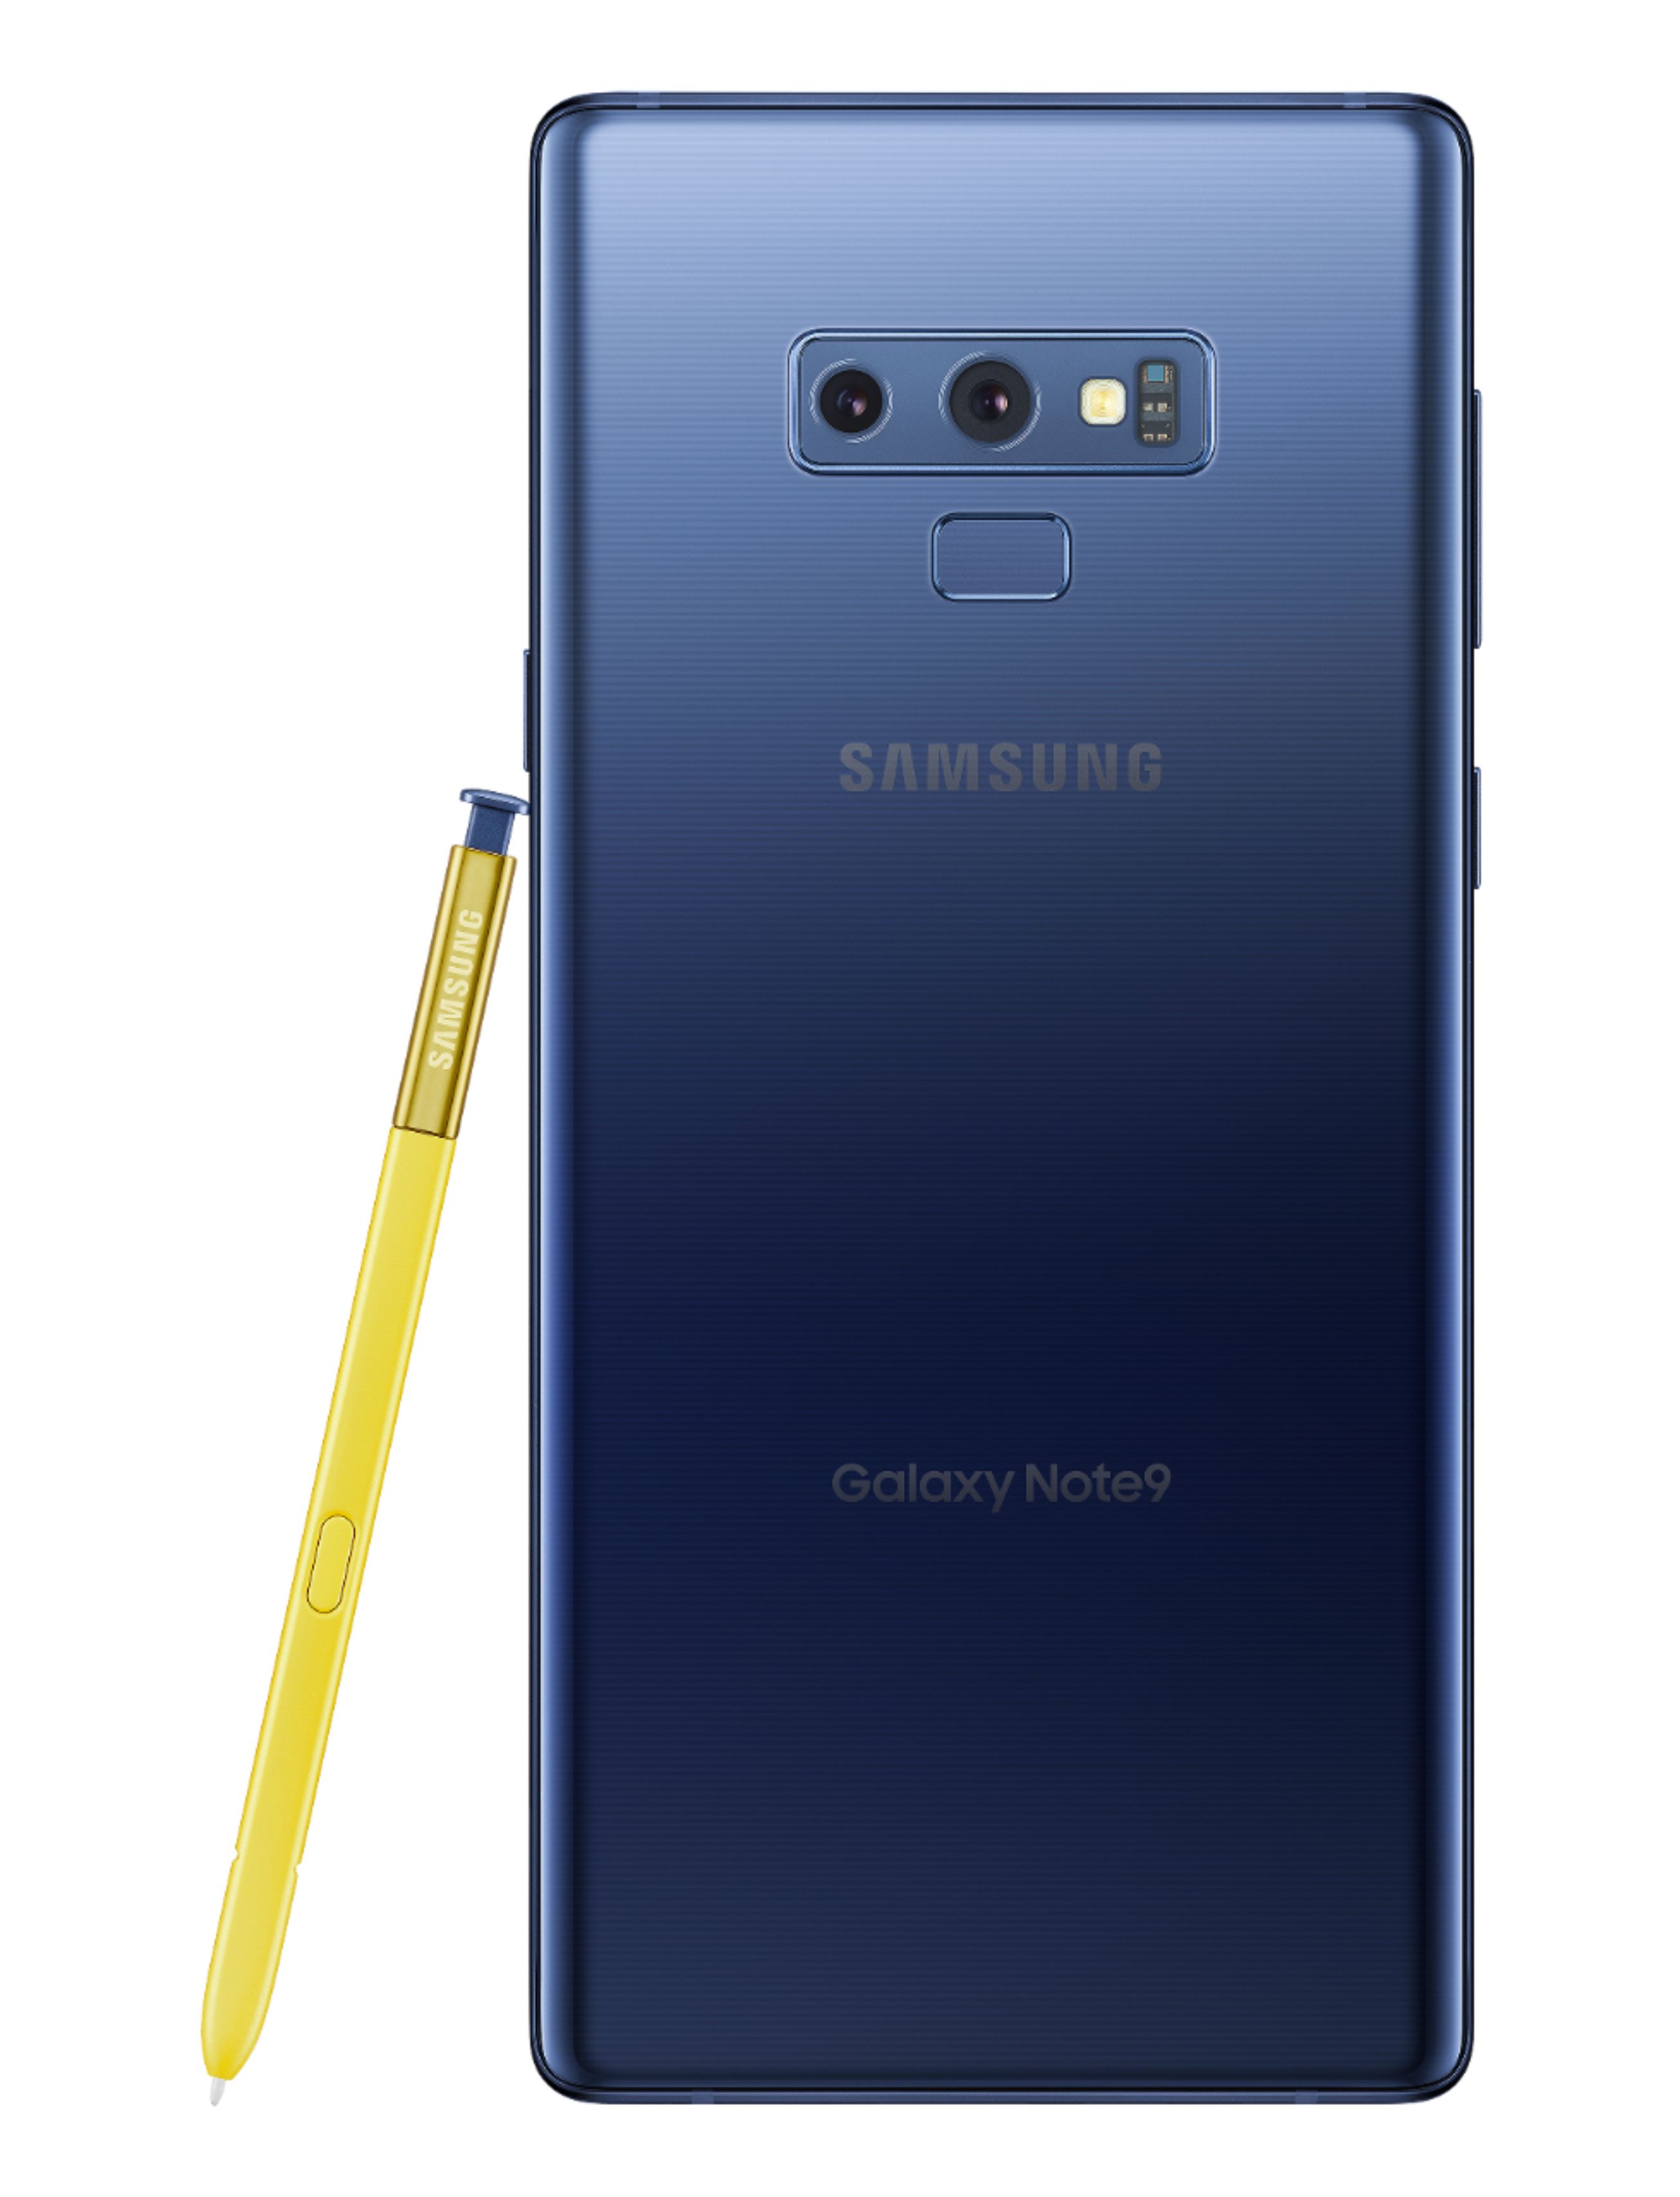 Back View: Samsung - Geek Squad Certified Refurbished Galaxy Note9 128GB - Ocean Blue (Verizon)